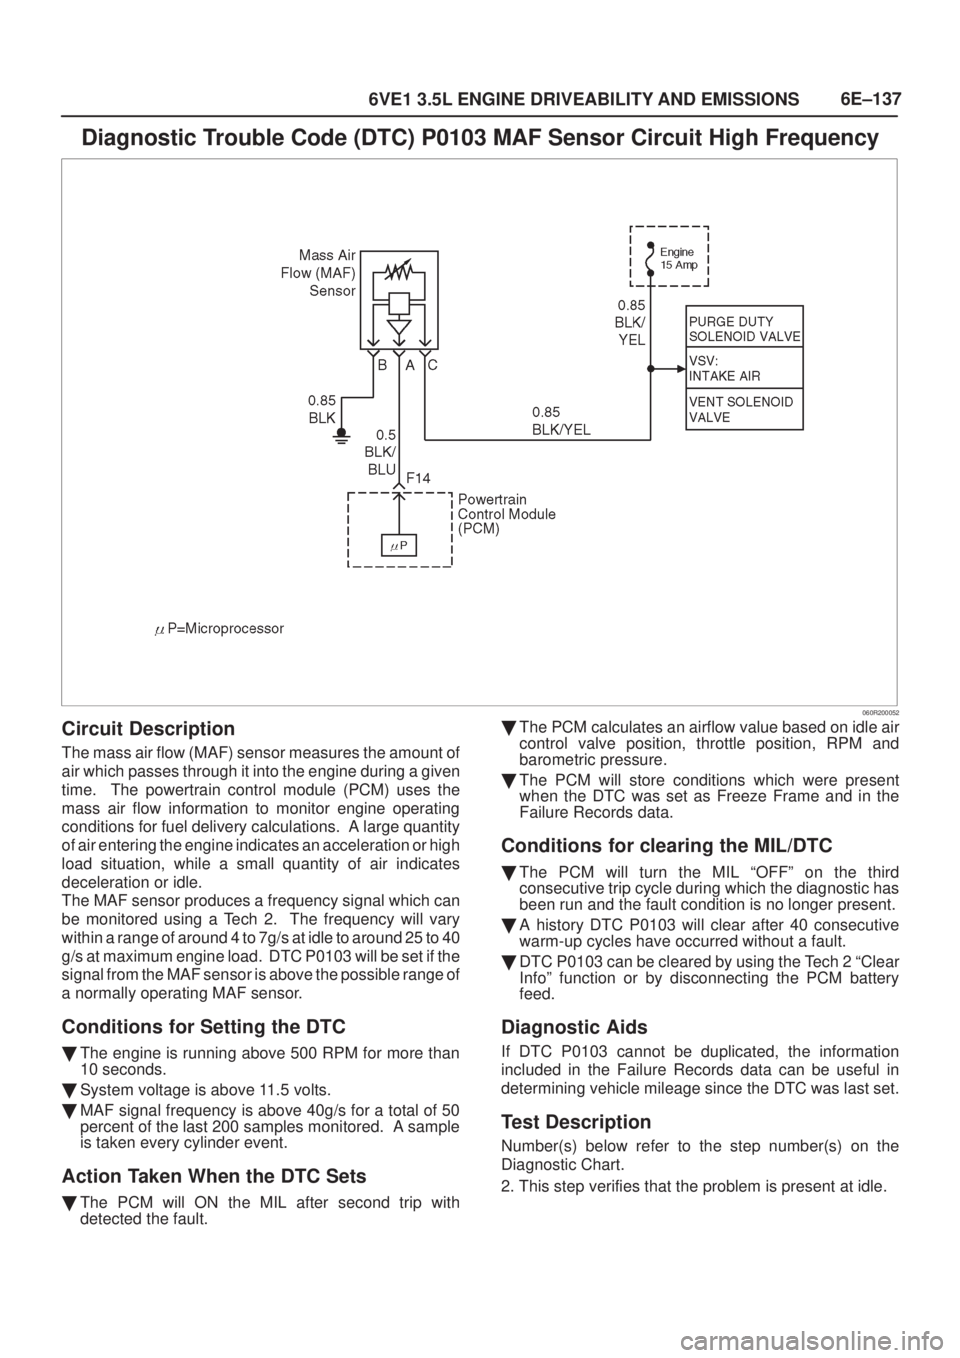 ISUZU AXIOM 2002  Service Repair Manual 6E±137
6VE1 3.5L ENGINE DRIVEABILITY AND EMISSIONS
Diagnostic Trouble Code (DTC) P0103 MAF Sensor Circuit High Frequency
060R200052
Circuit Description
The mass air flow (MAF) sensor measures the amo